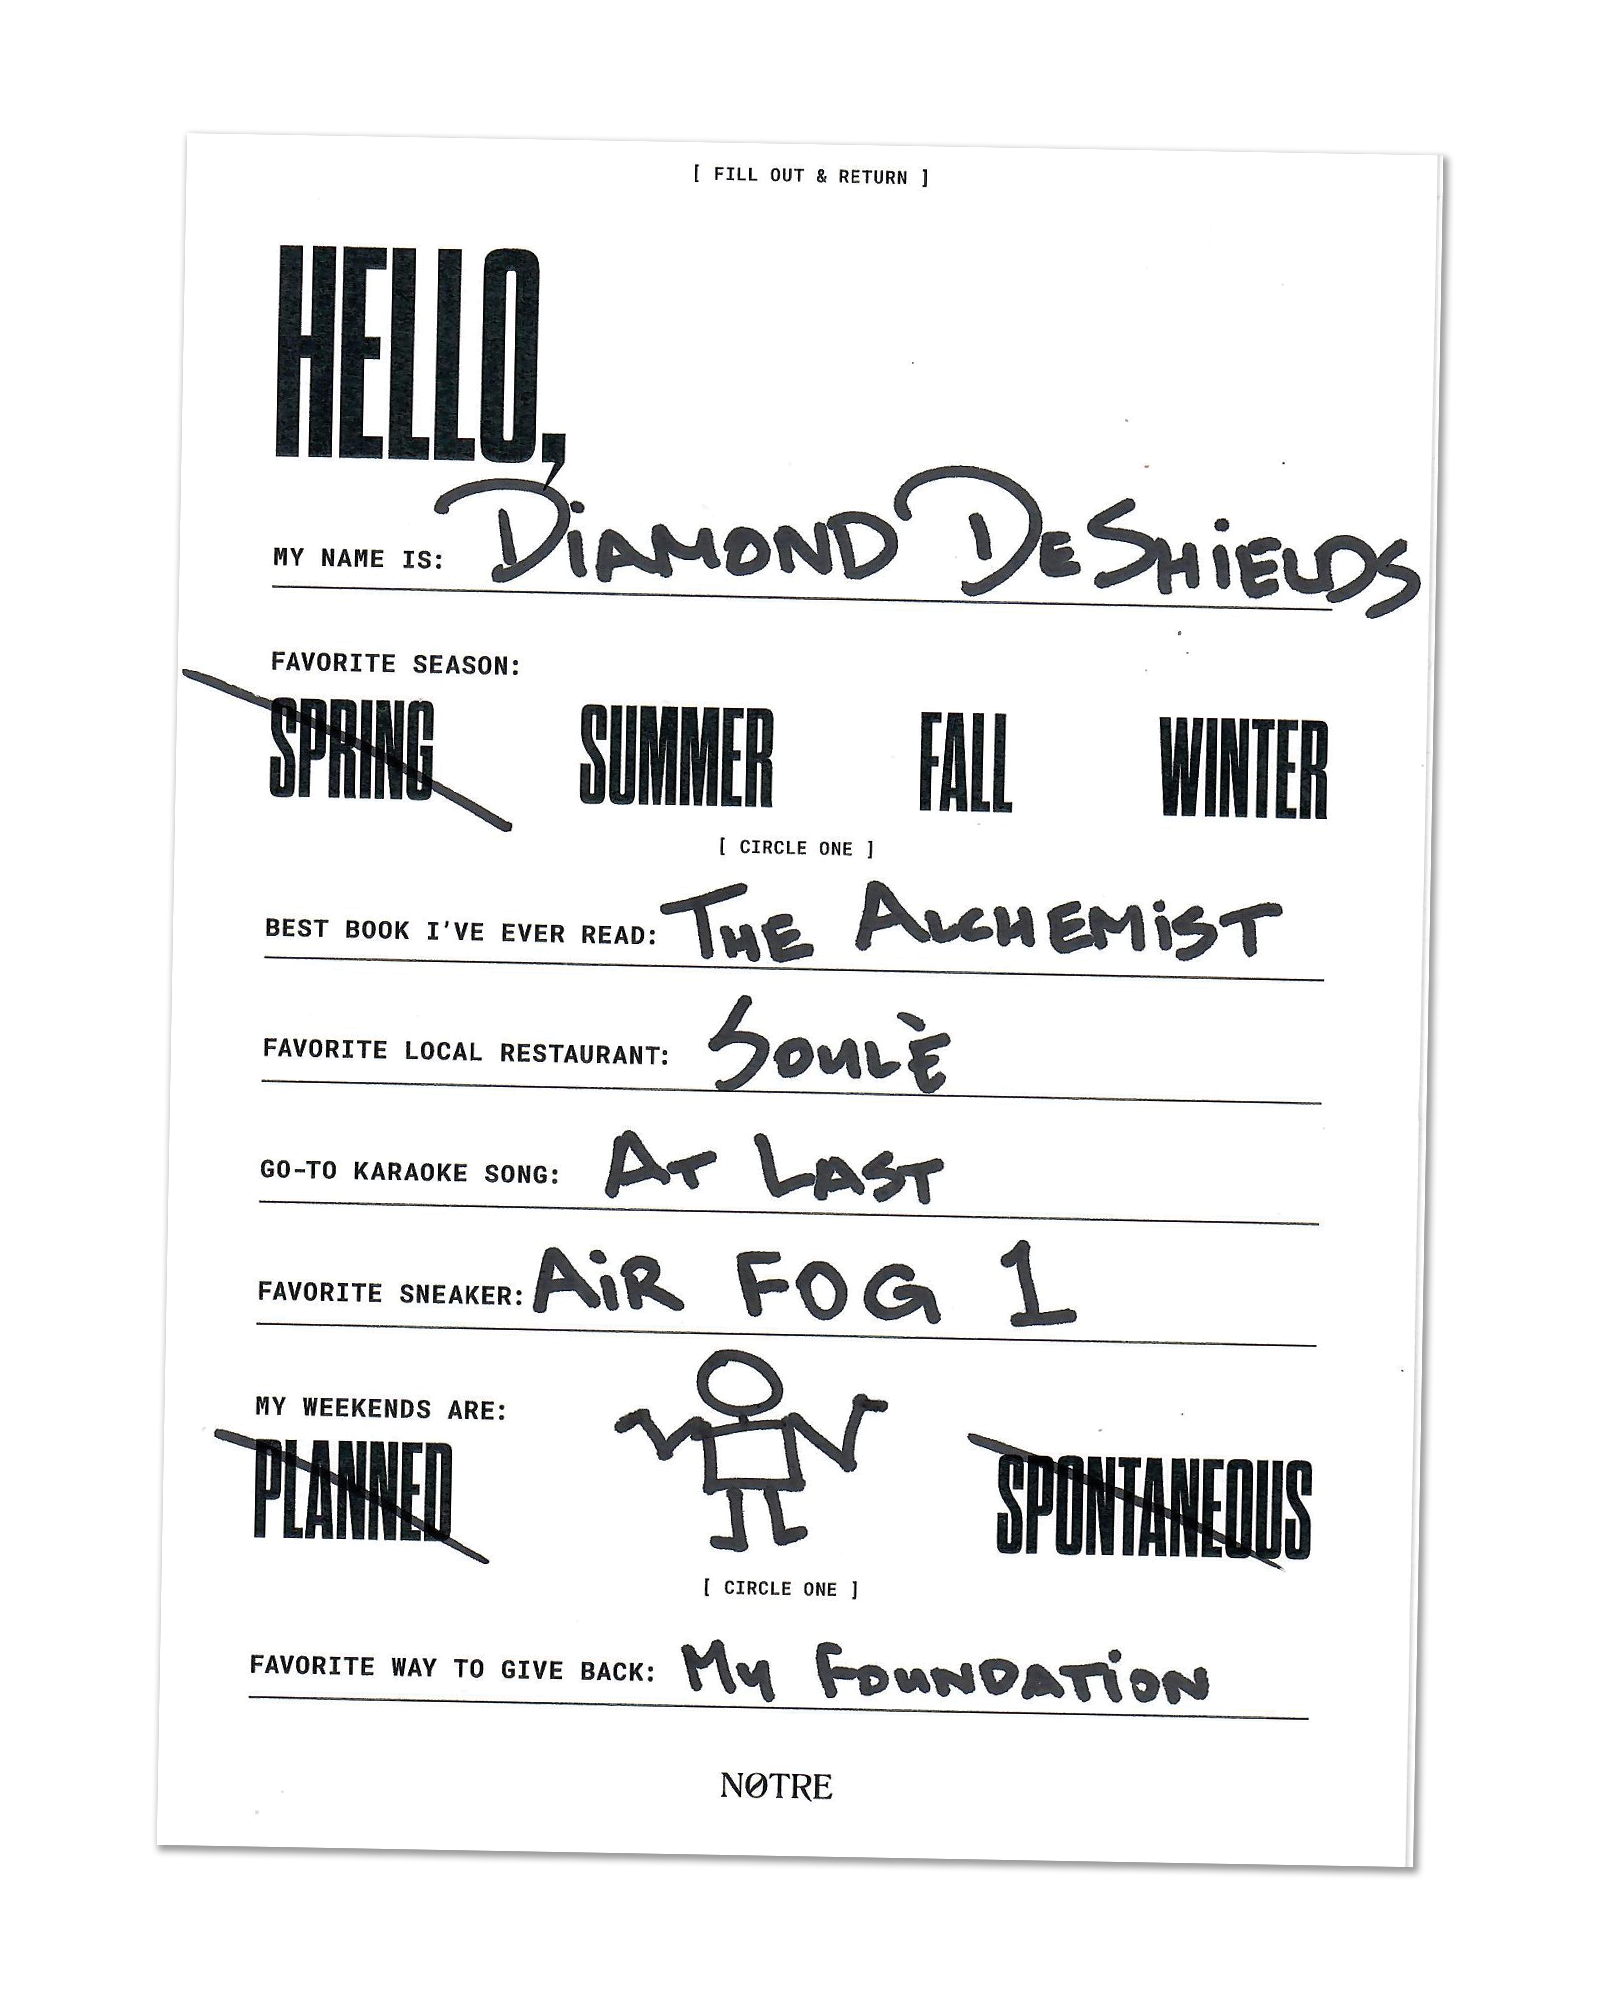 Our Friend: Diamond DeShields